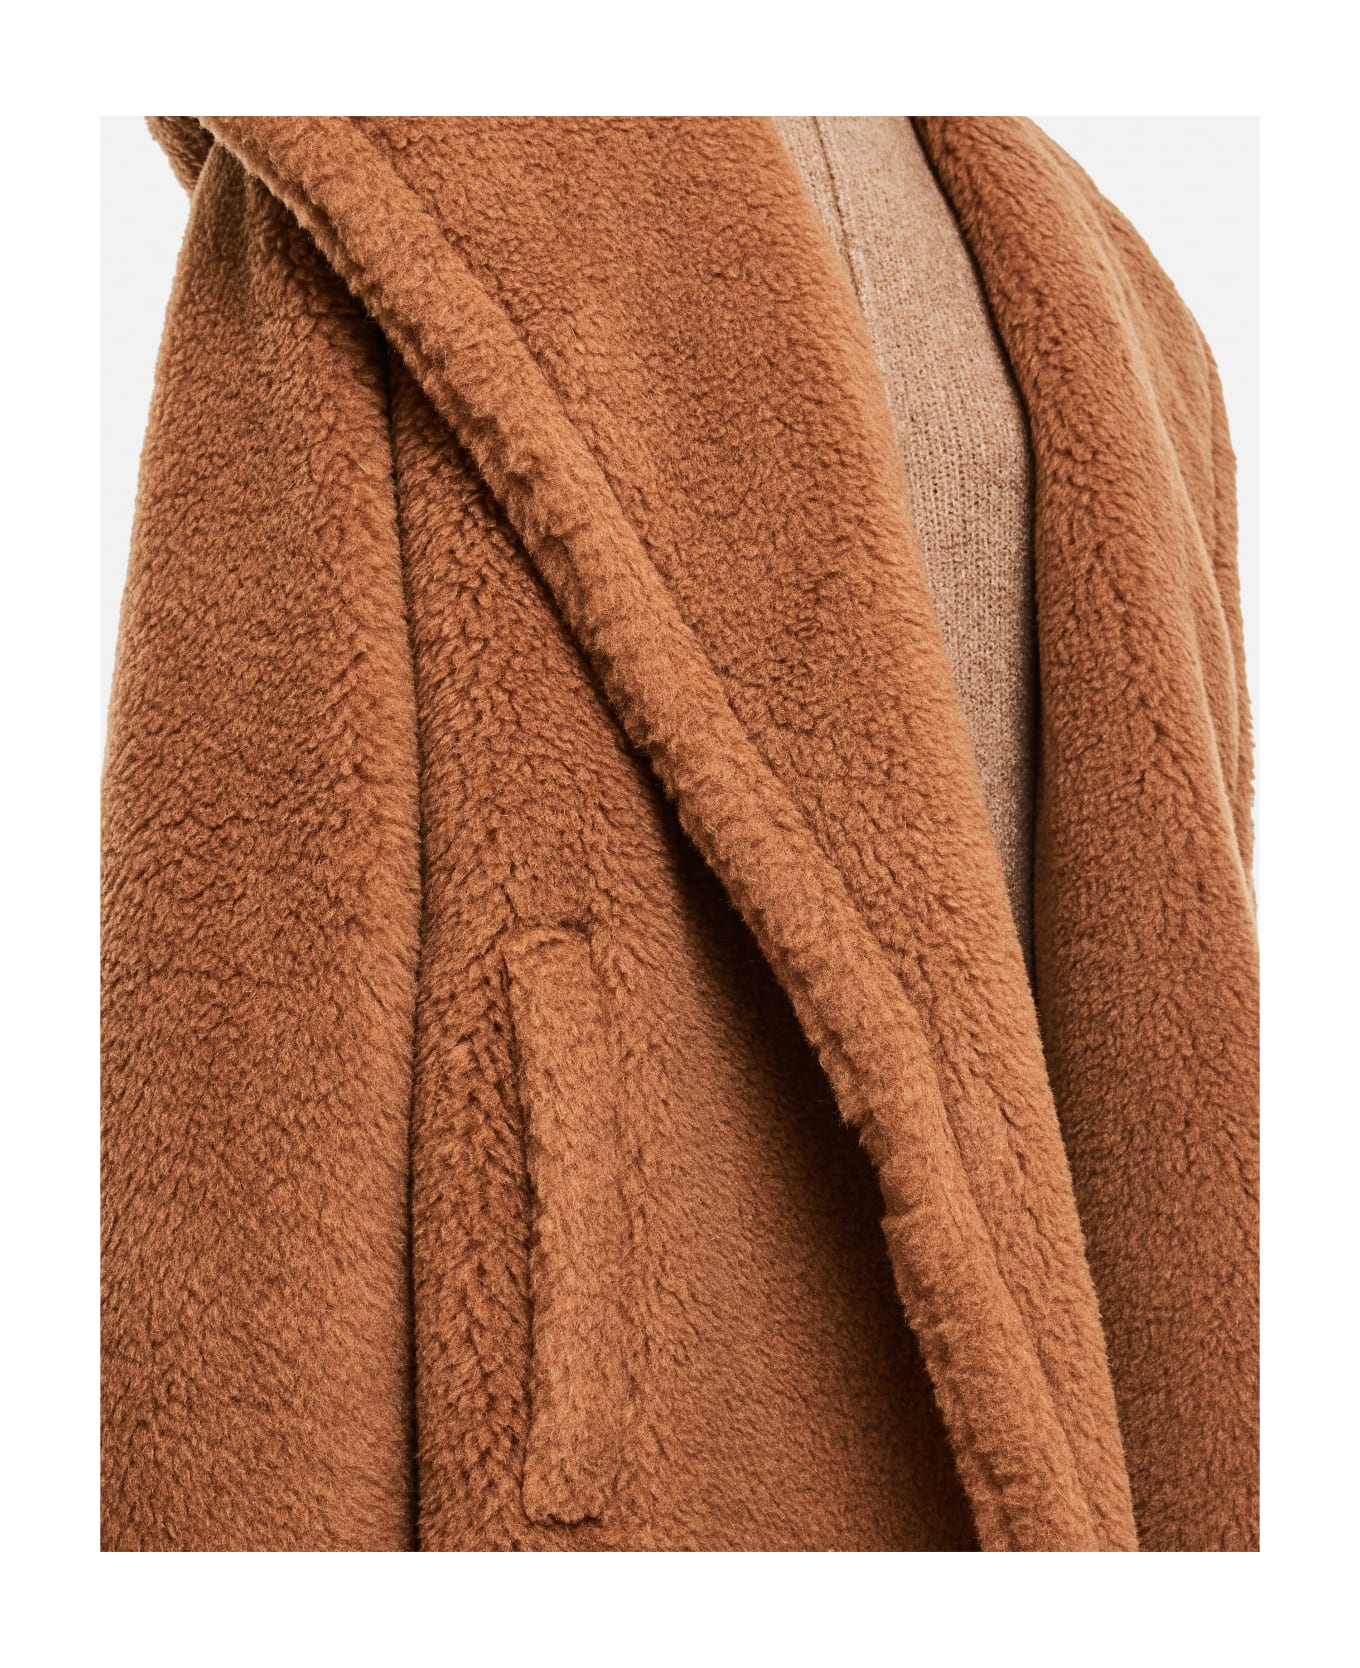 Max Mara Apogeo Coat In Camel - Brown